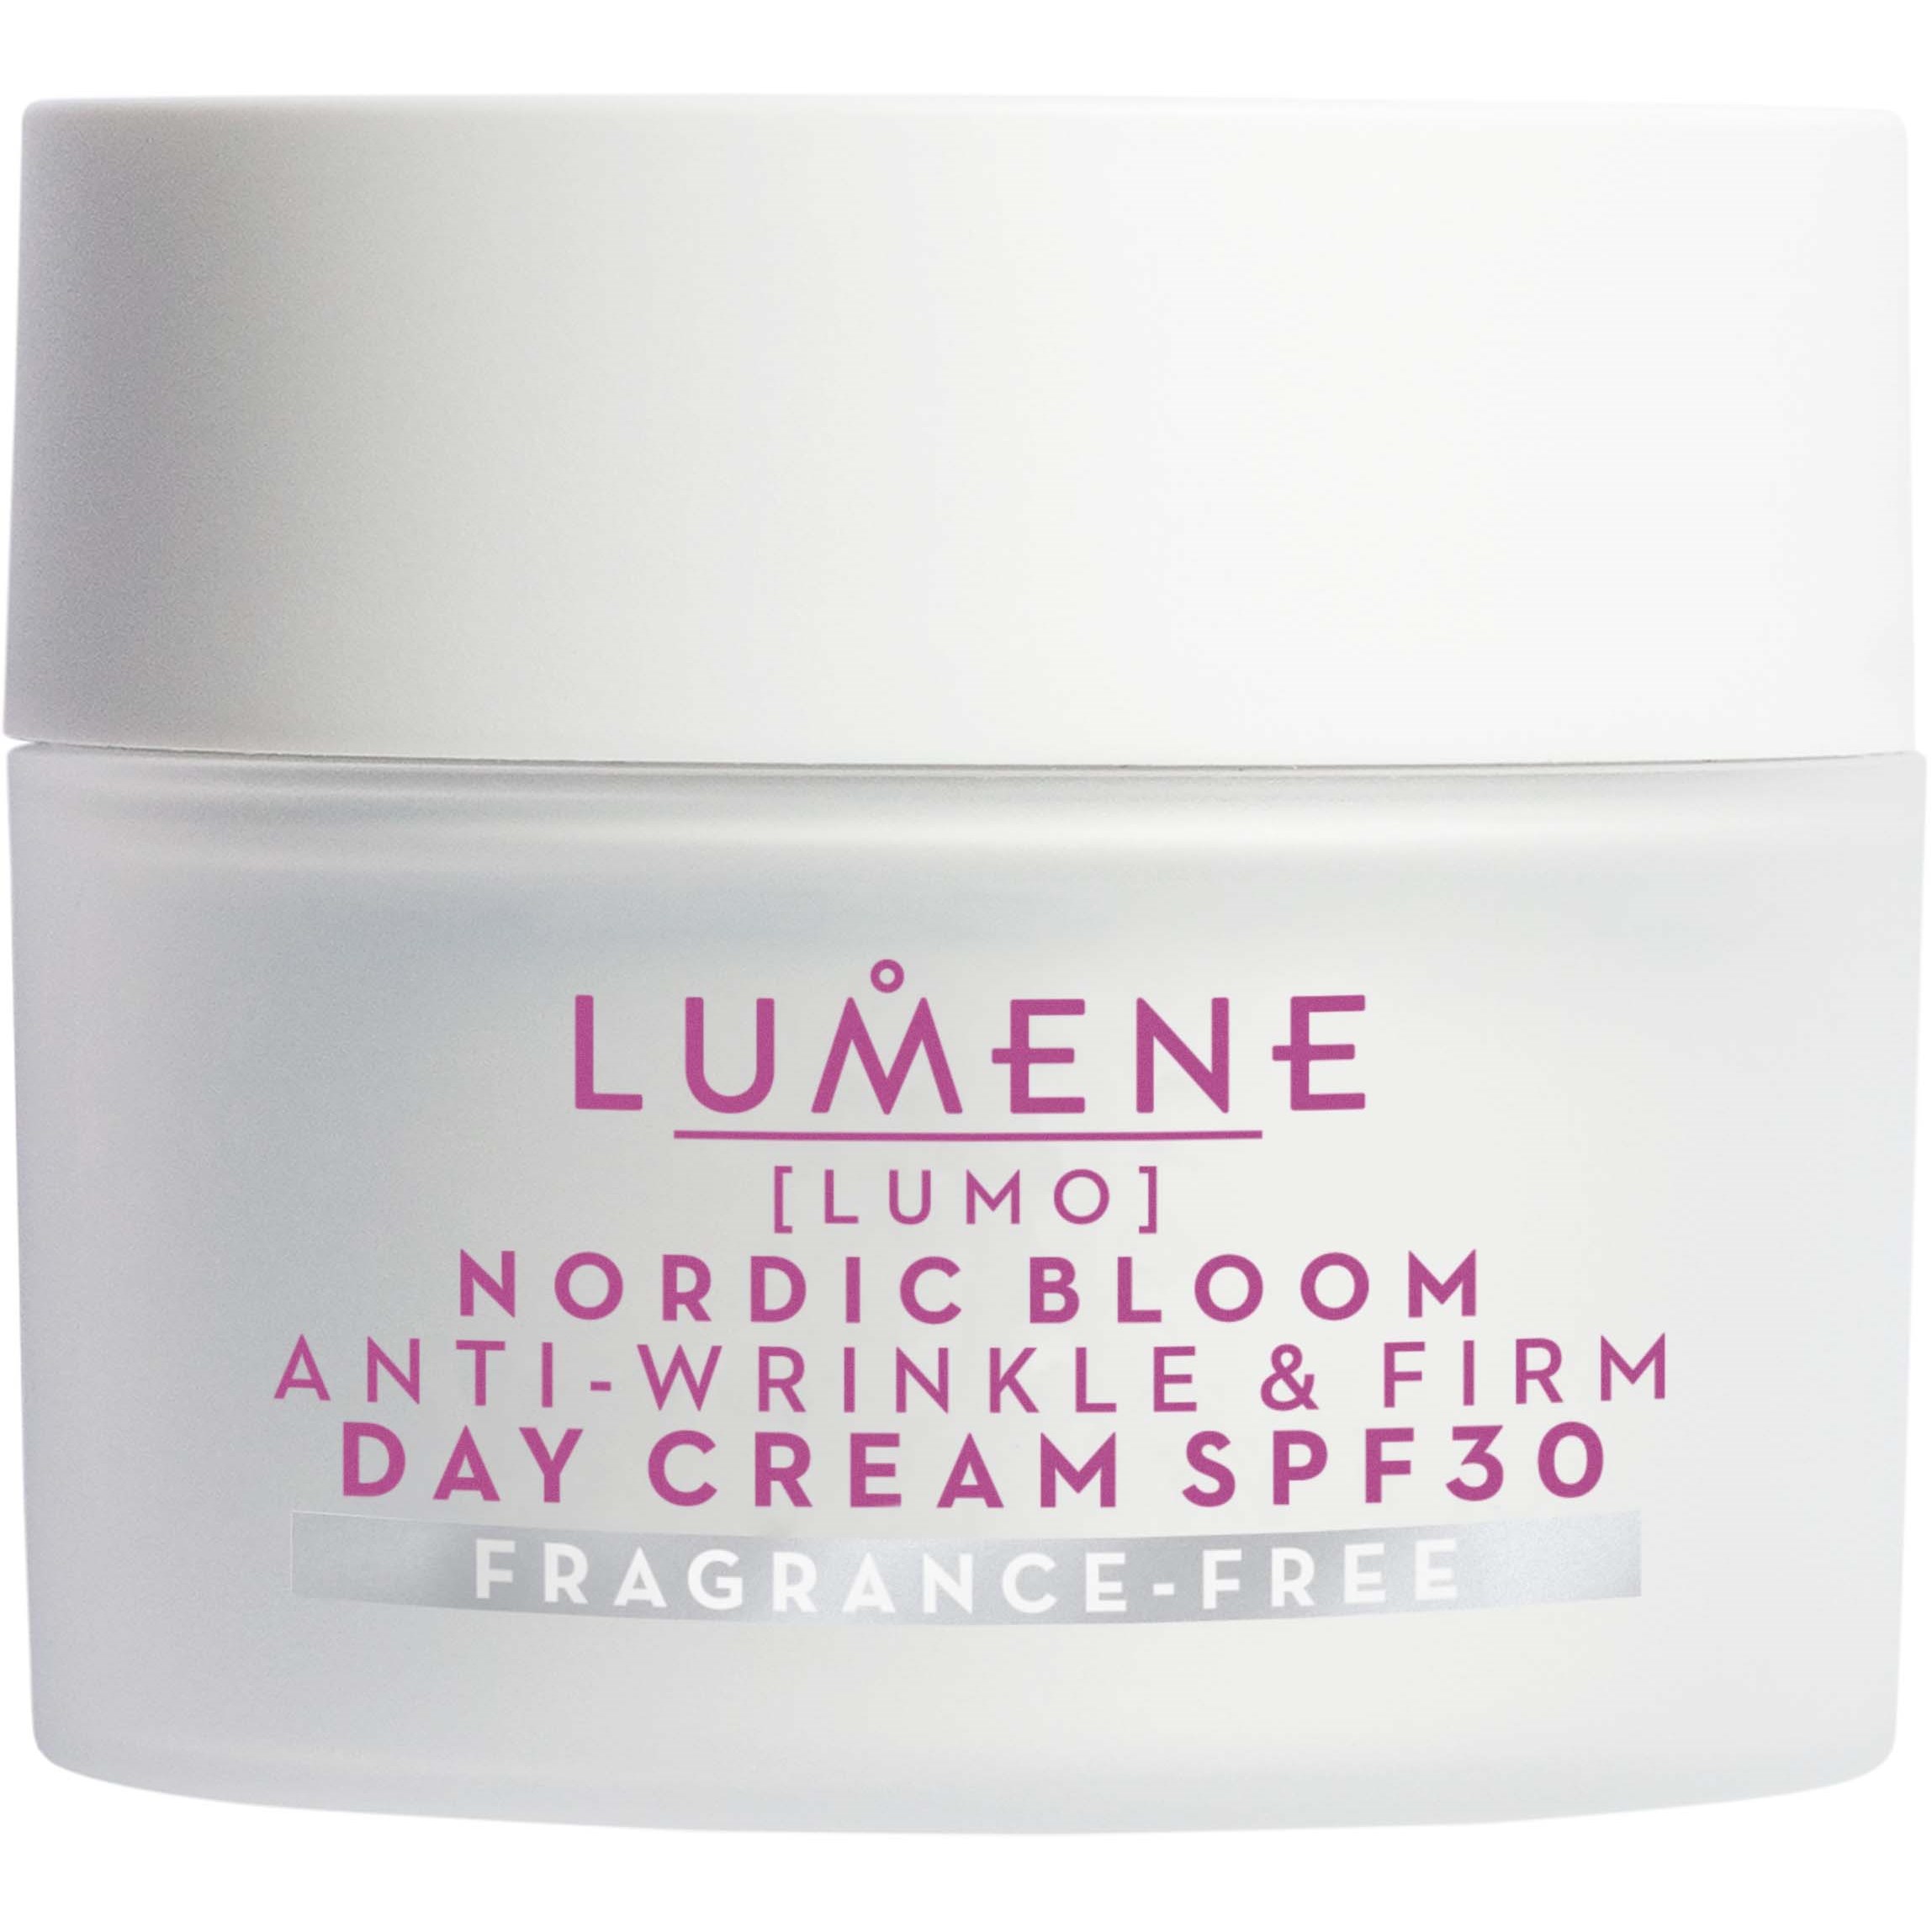 Lumene Nordic Bloom Anti-Wrinkle & Firm Day Cream SPF30 Fragrance Free